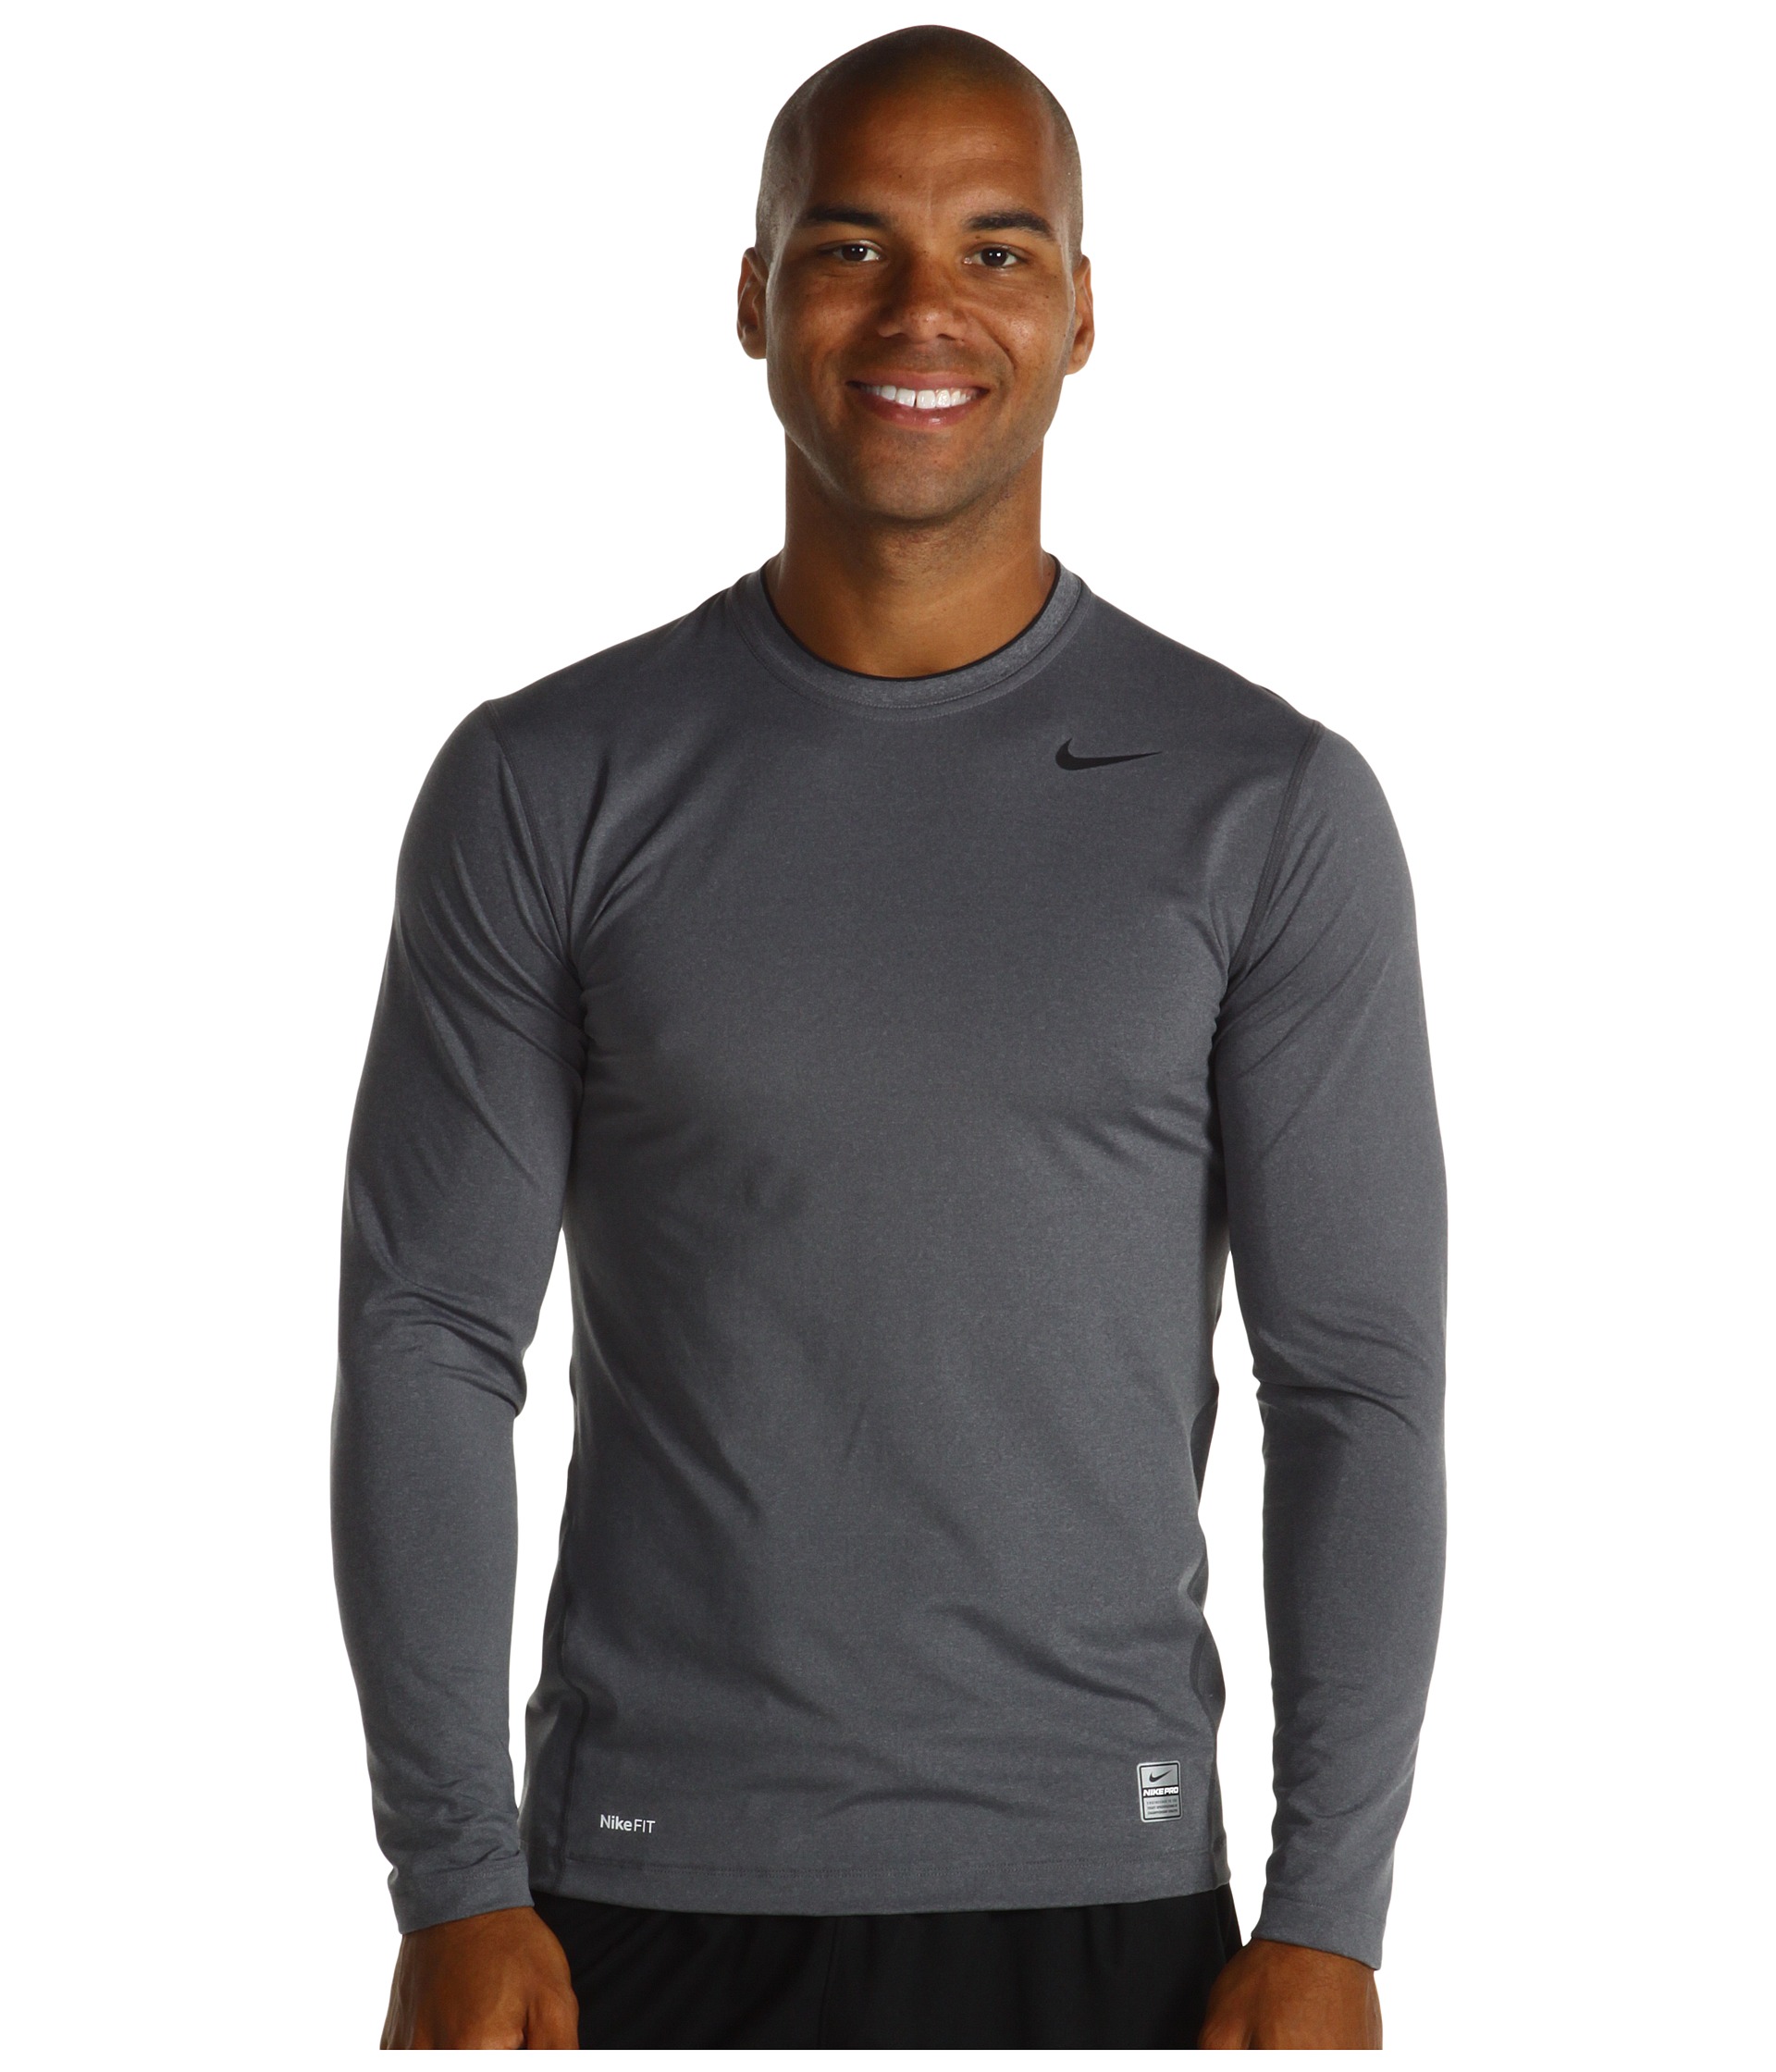 Nike Pro Combat Core Shirt $15.99 ( 43% off MSRP $28.00)